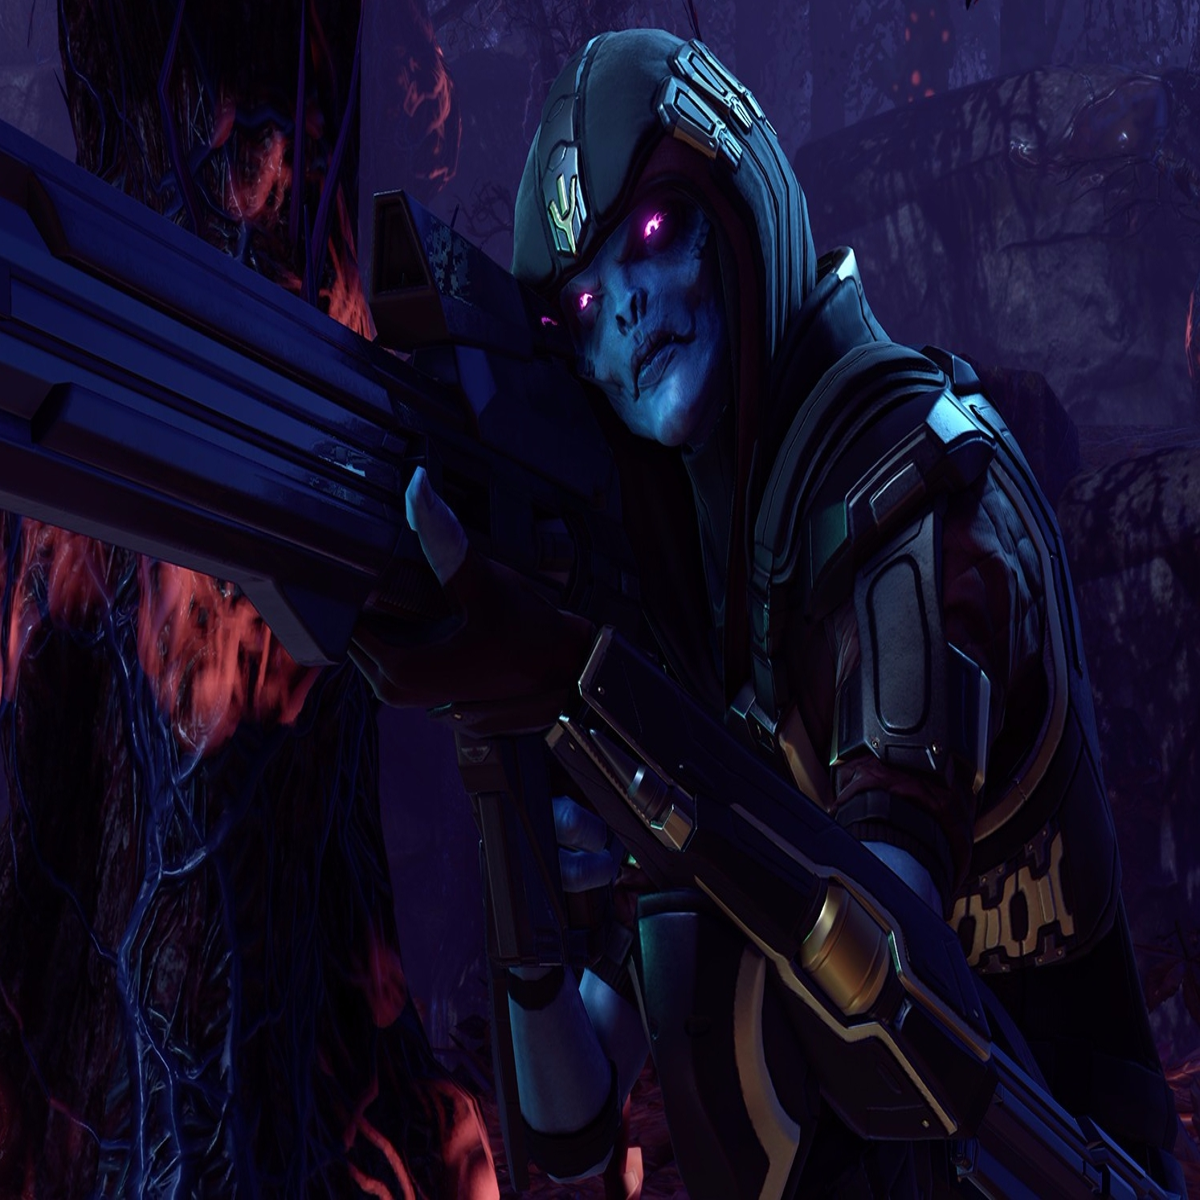 XCOM 2 Alien Hunters DLC releasing next week with new Ruler aliens